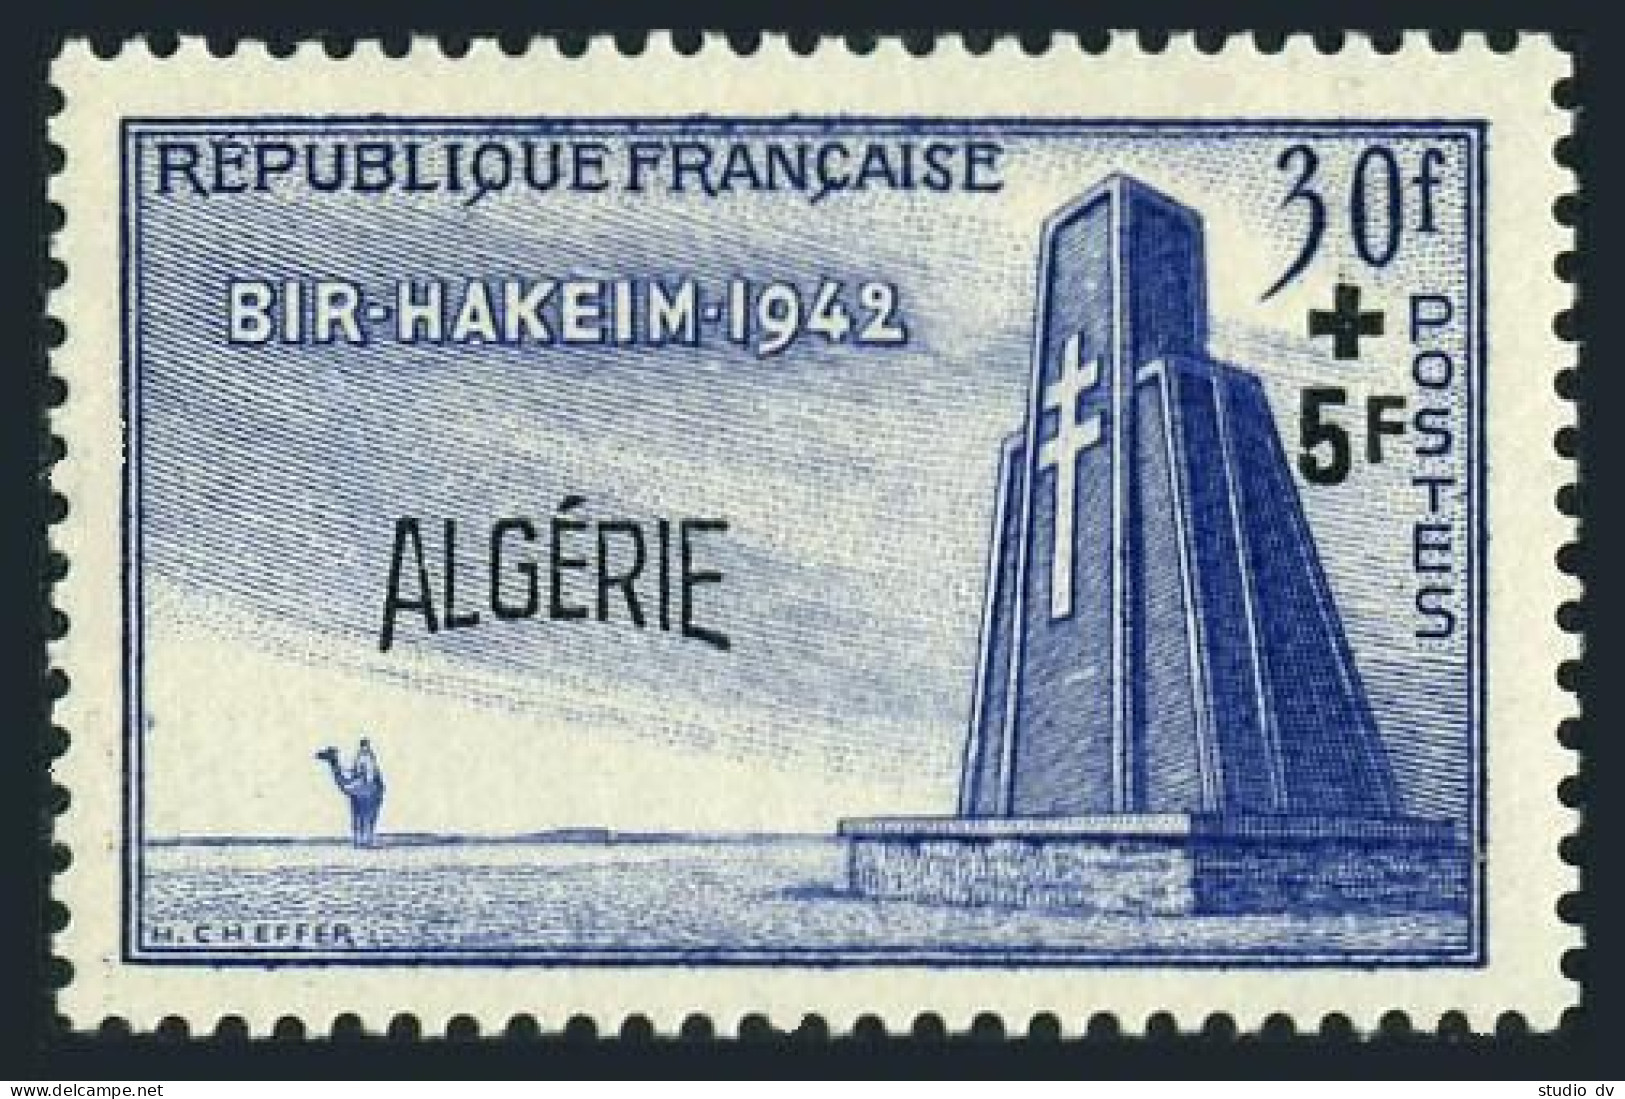 Algeria B66, Hinged. Mi 313. The Defense Of Bir-Hakeim, 10th Ann,1952. Monument. - Algeria (1962-...)